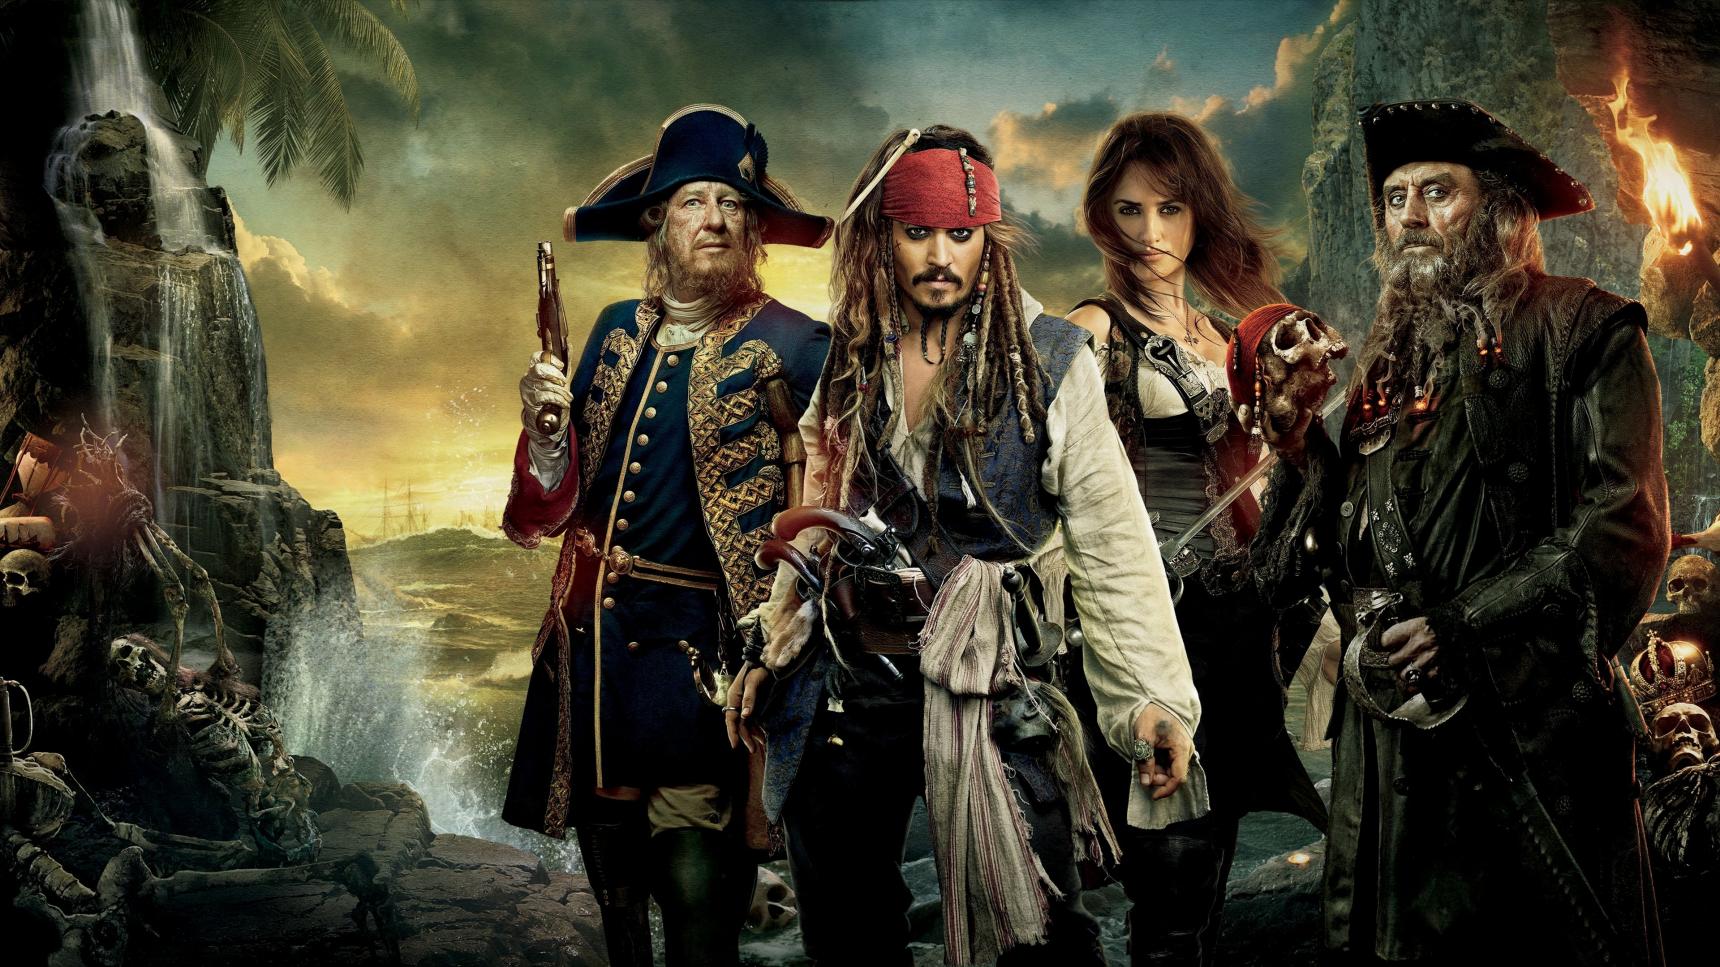 poster de Piratas del caribe: Navegando aguas misteriosas